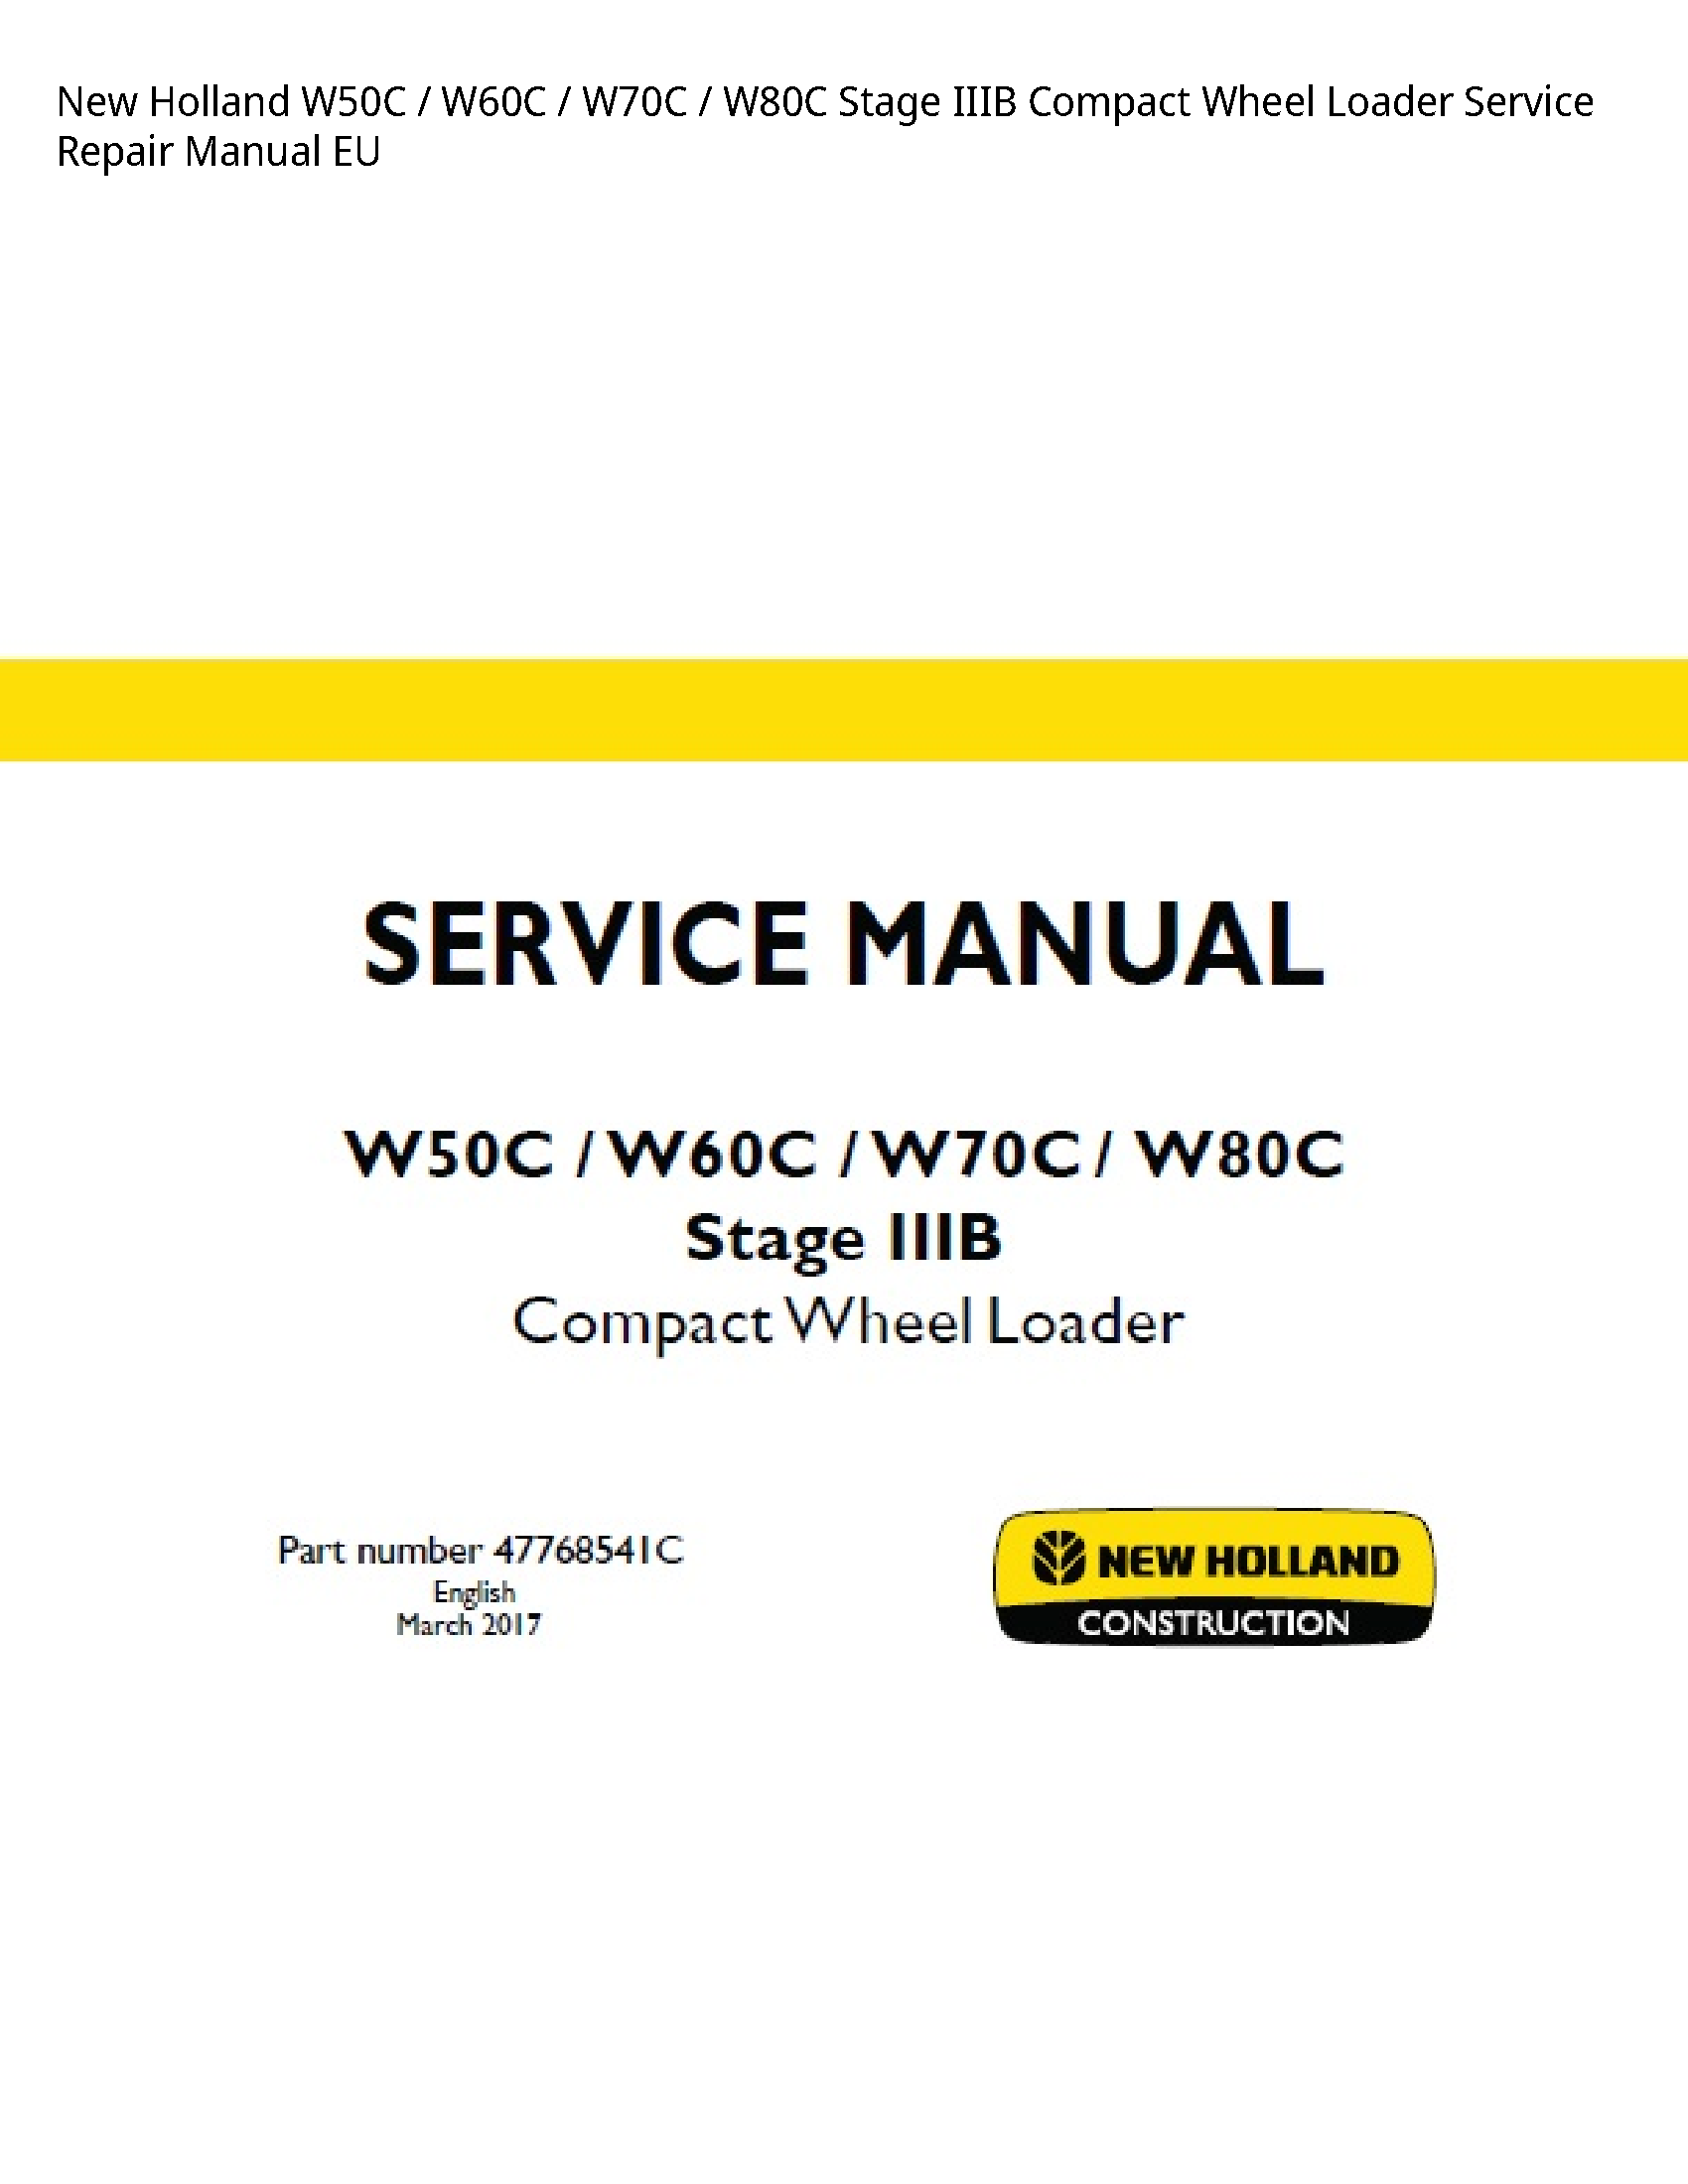 New Holland W50C Stage IIIB Compact Wheel Loader manual